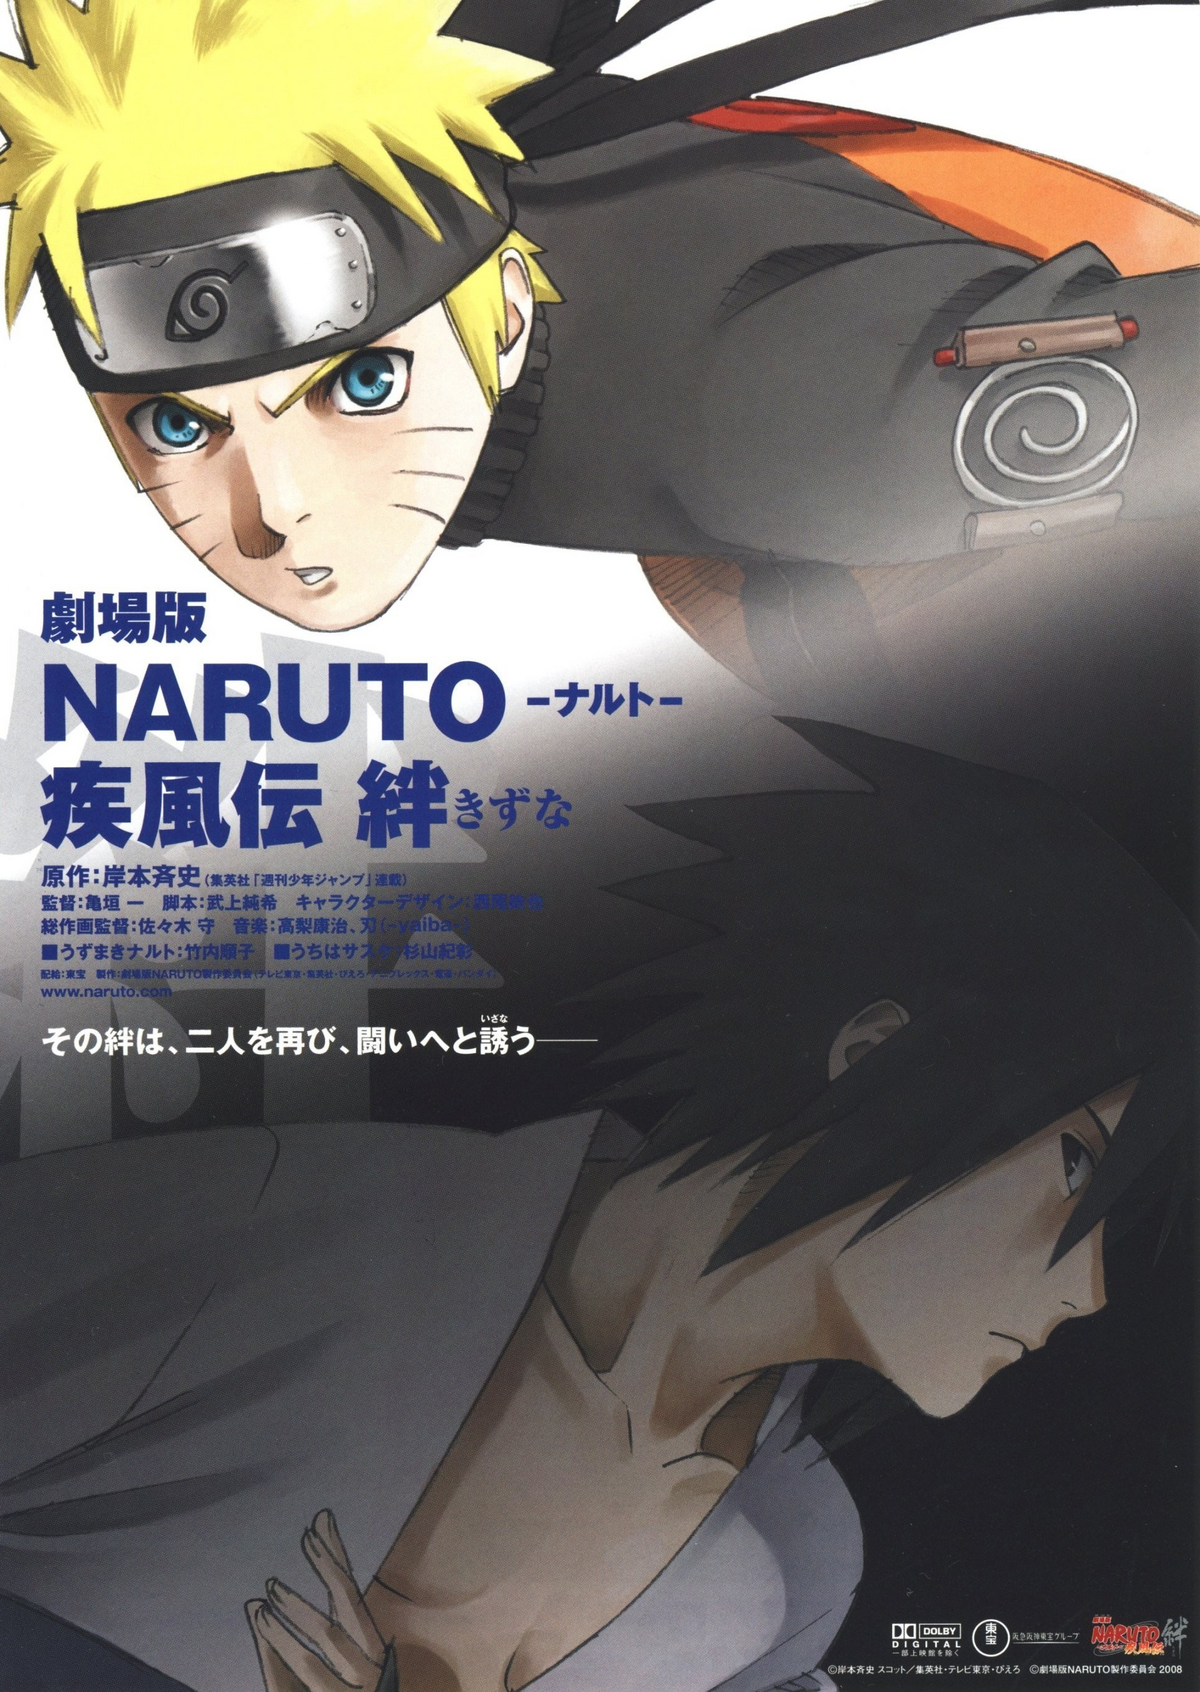 Gekijõban Naruto Shippuden: The Lost Tower, Wiki